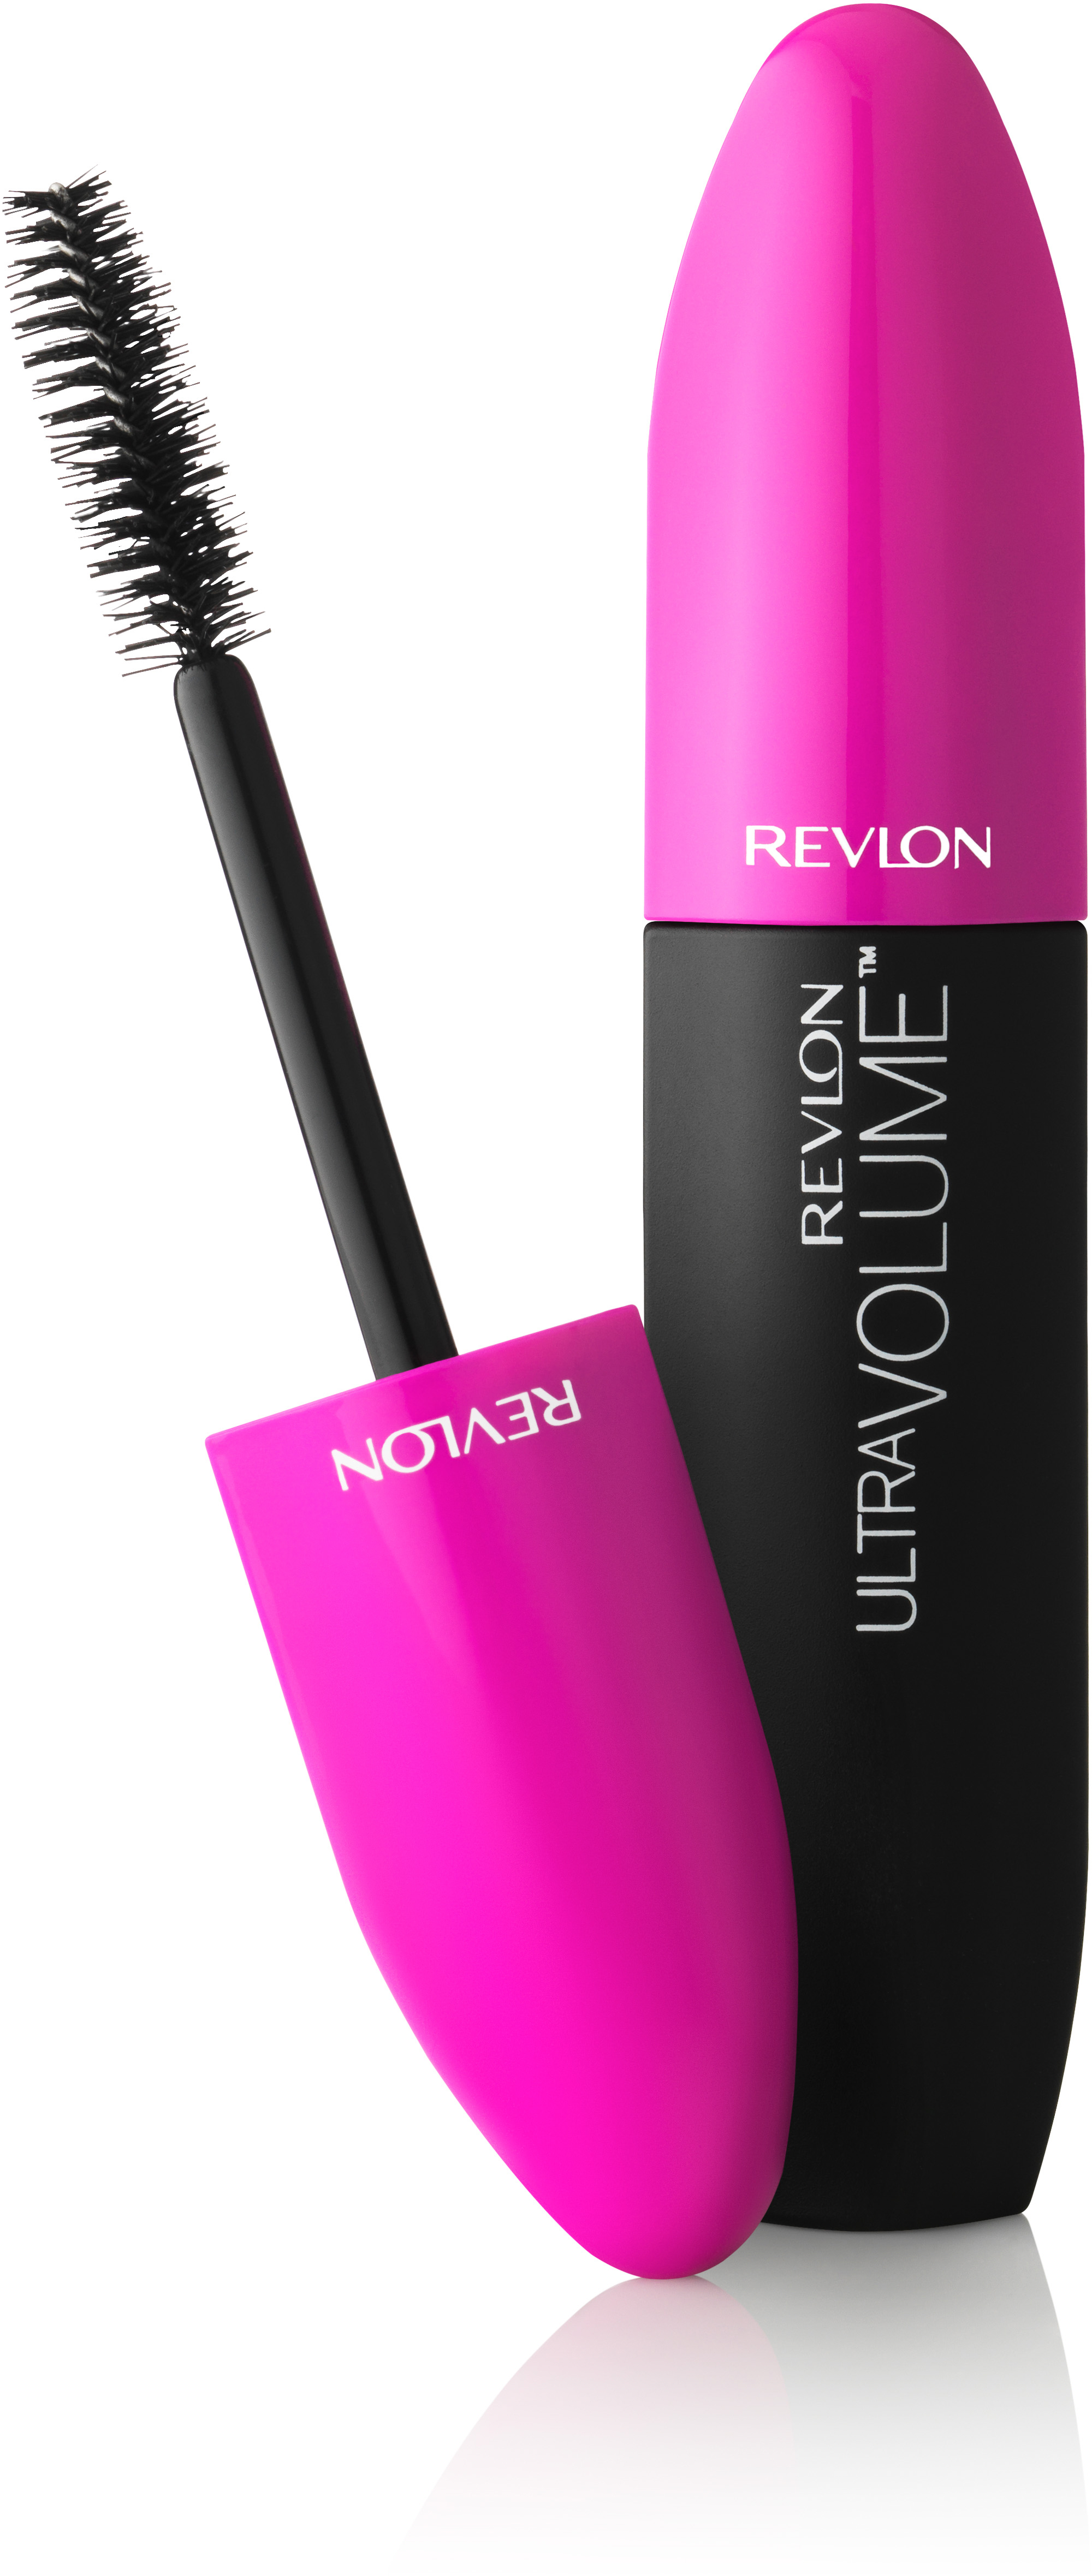 Revlon Cosmetics Mascara Ultra Volume 1 Blackest Black